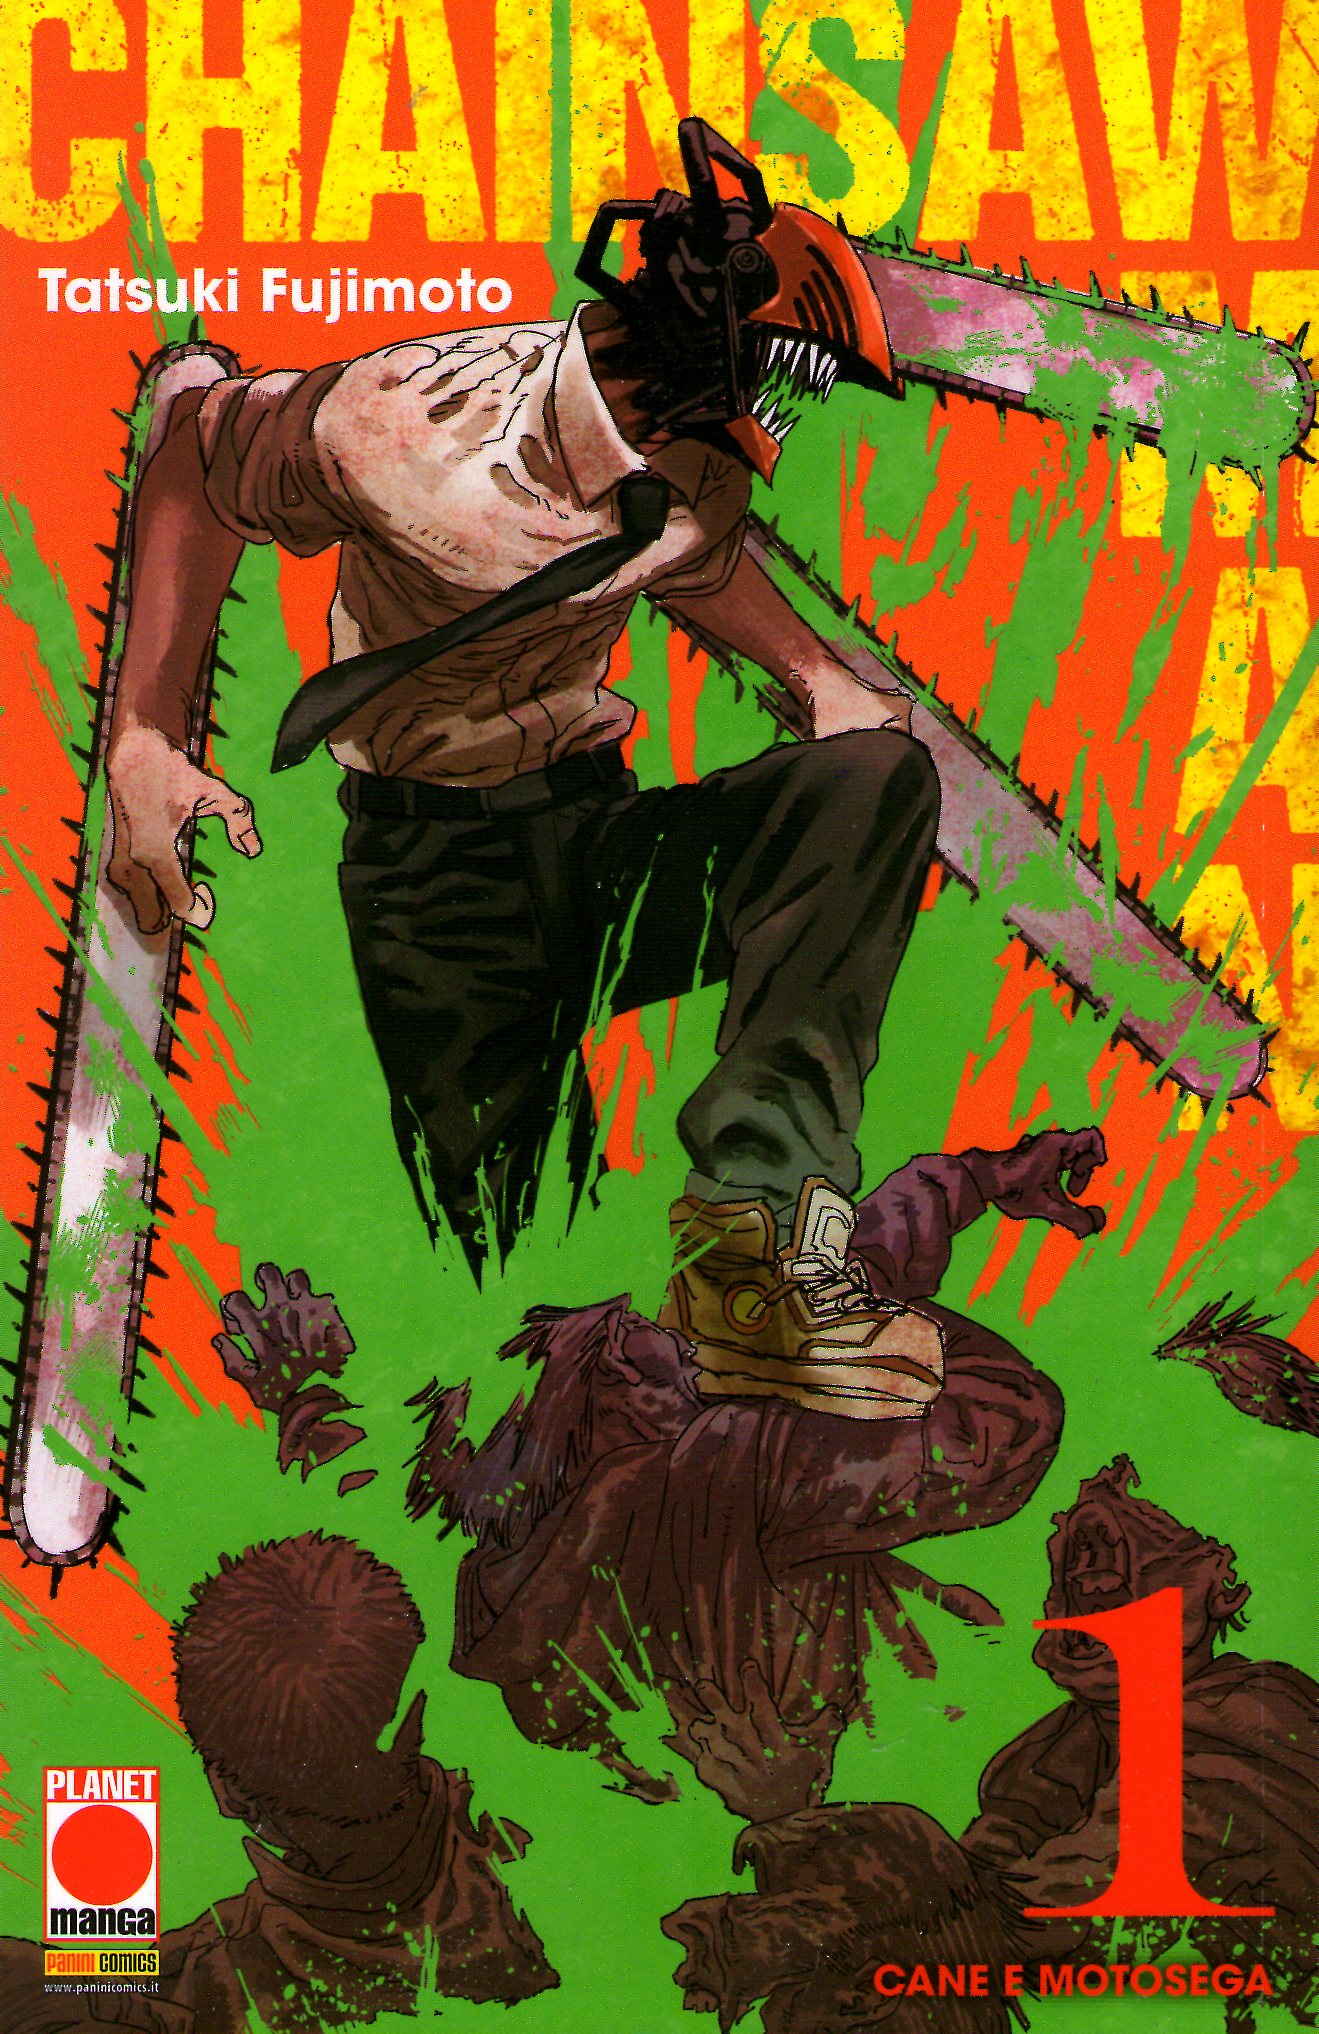 READ EPUB] Chainsaw man, Vol. 1: Cane e motosega by Tatsuki